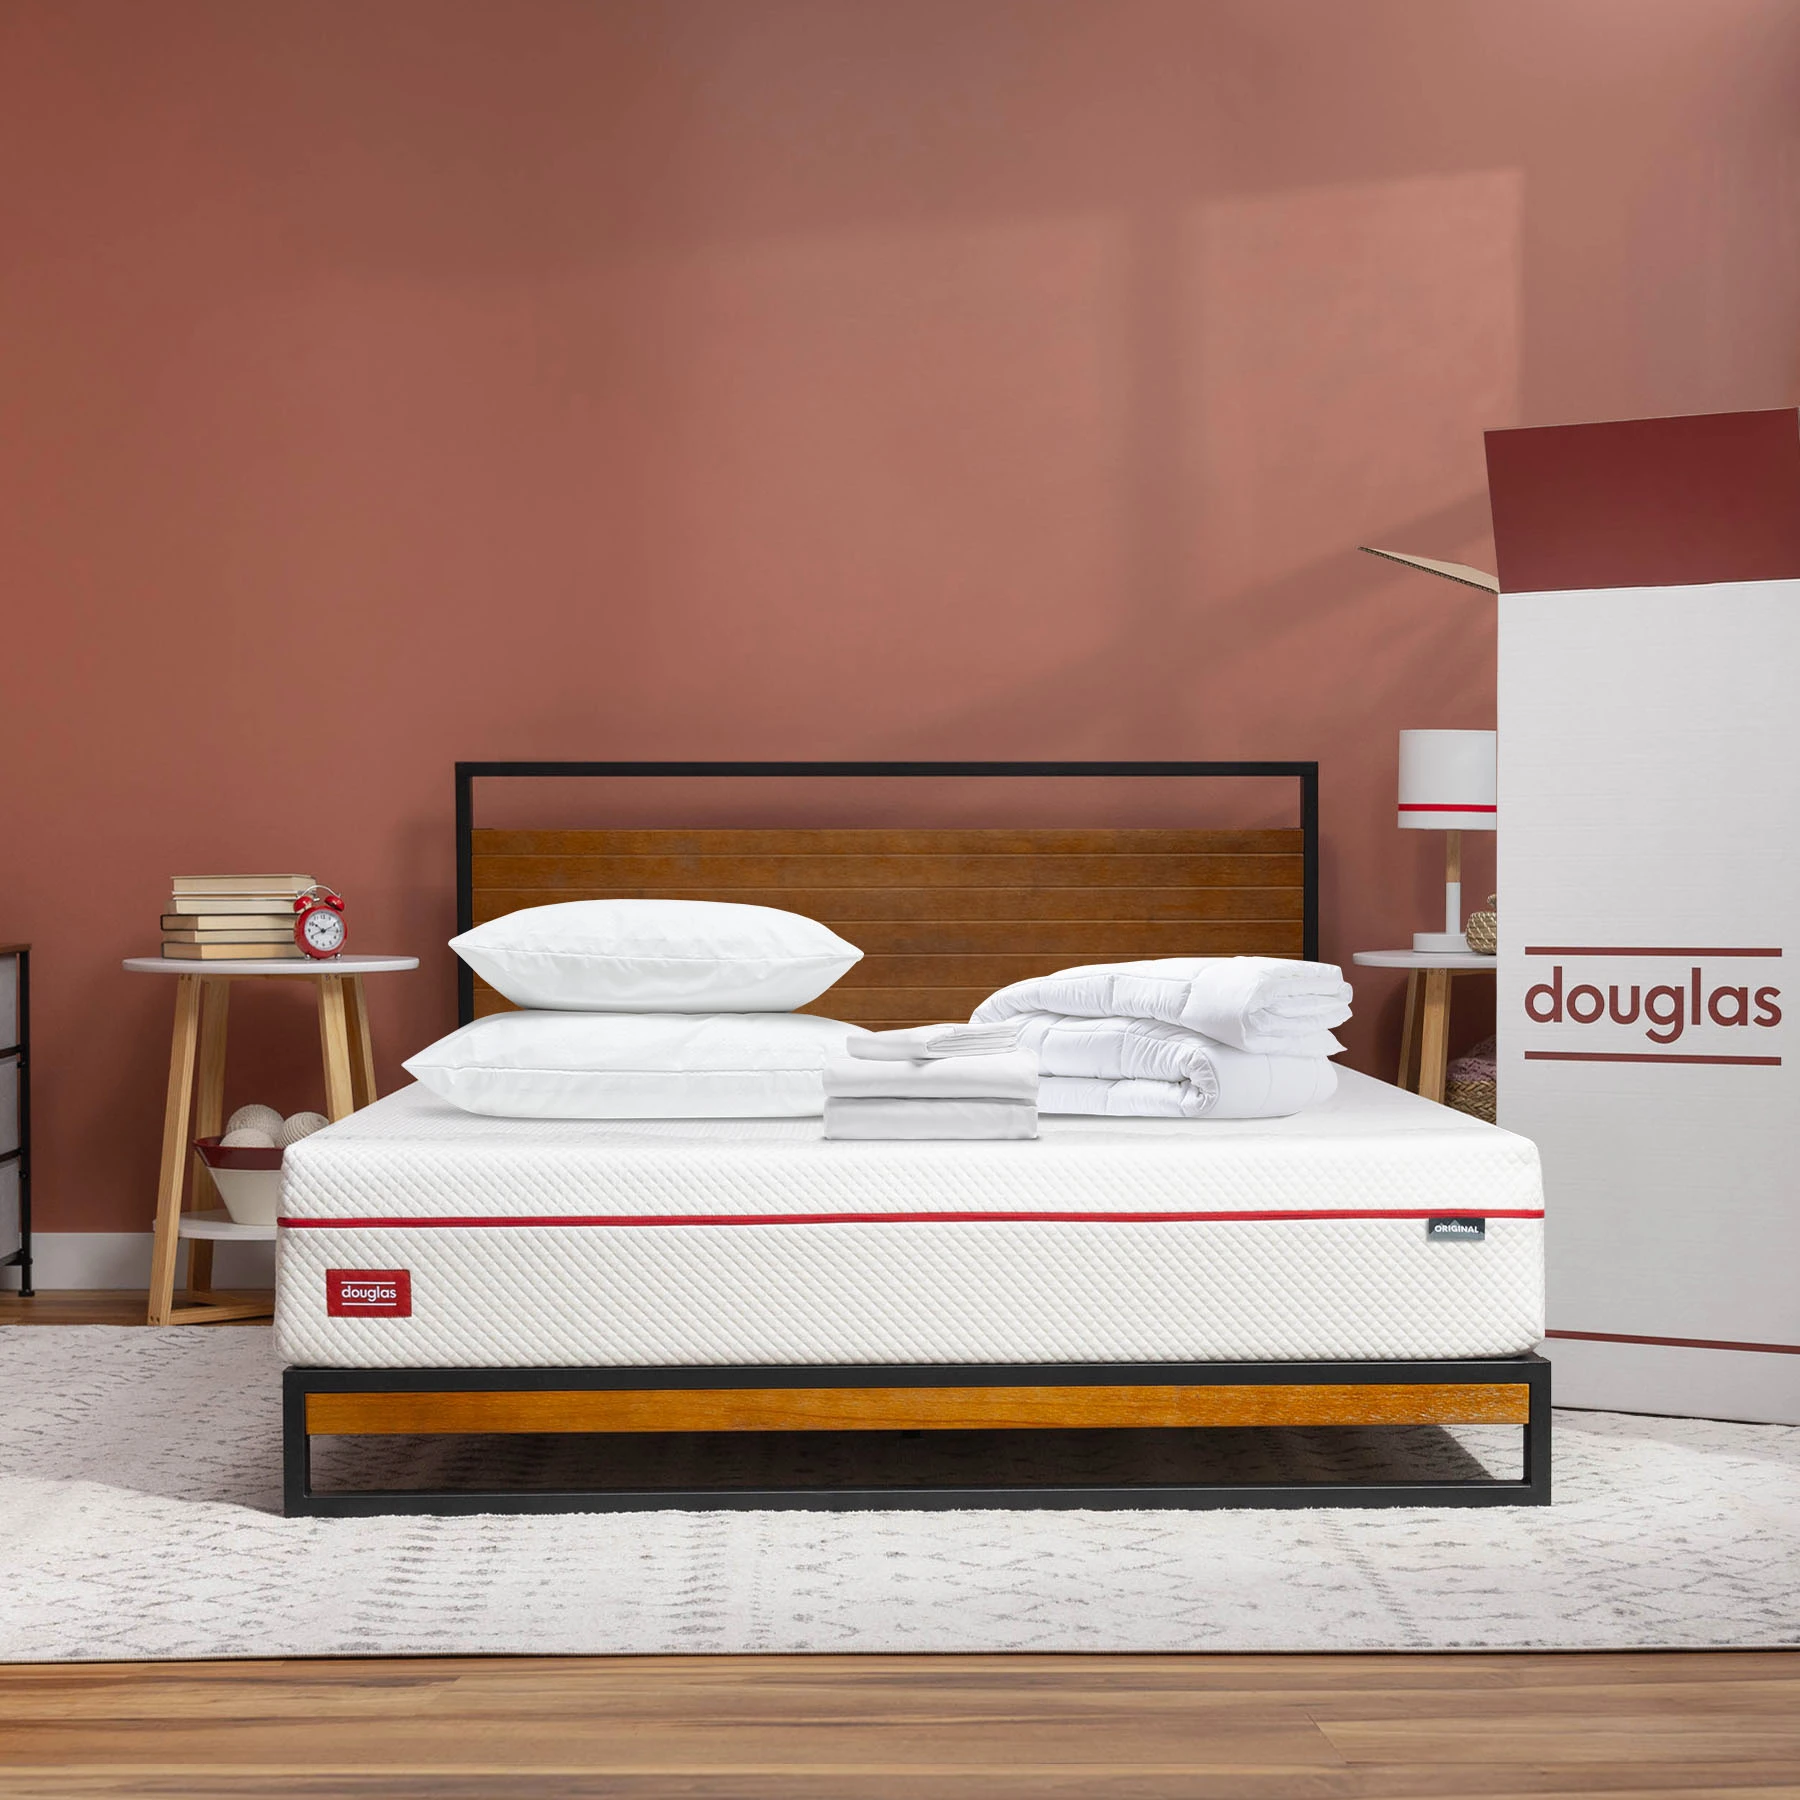  Douglas Original mattress